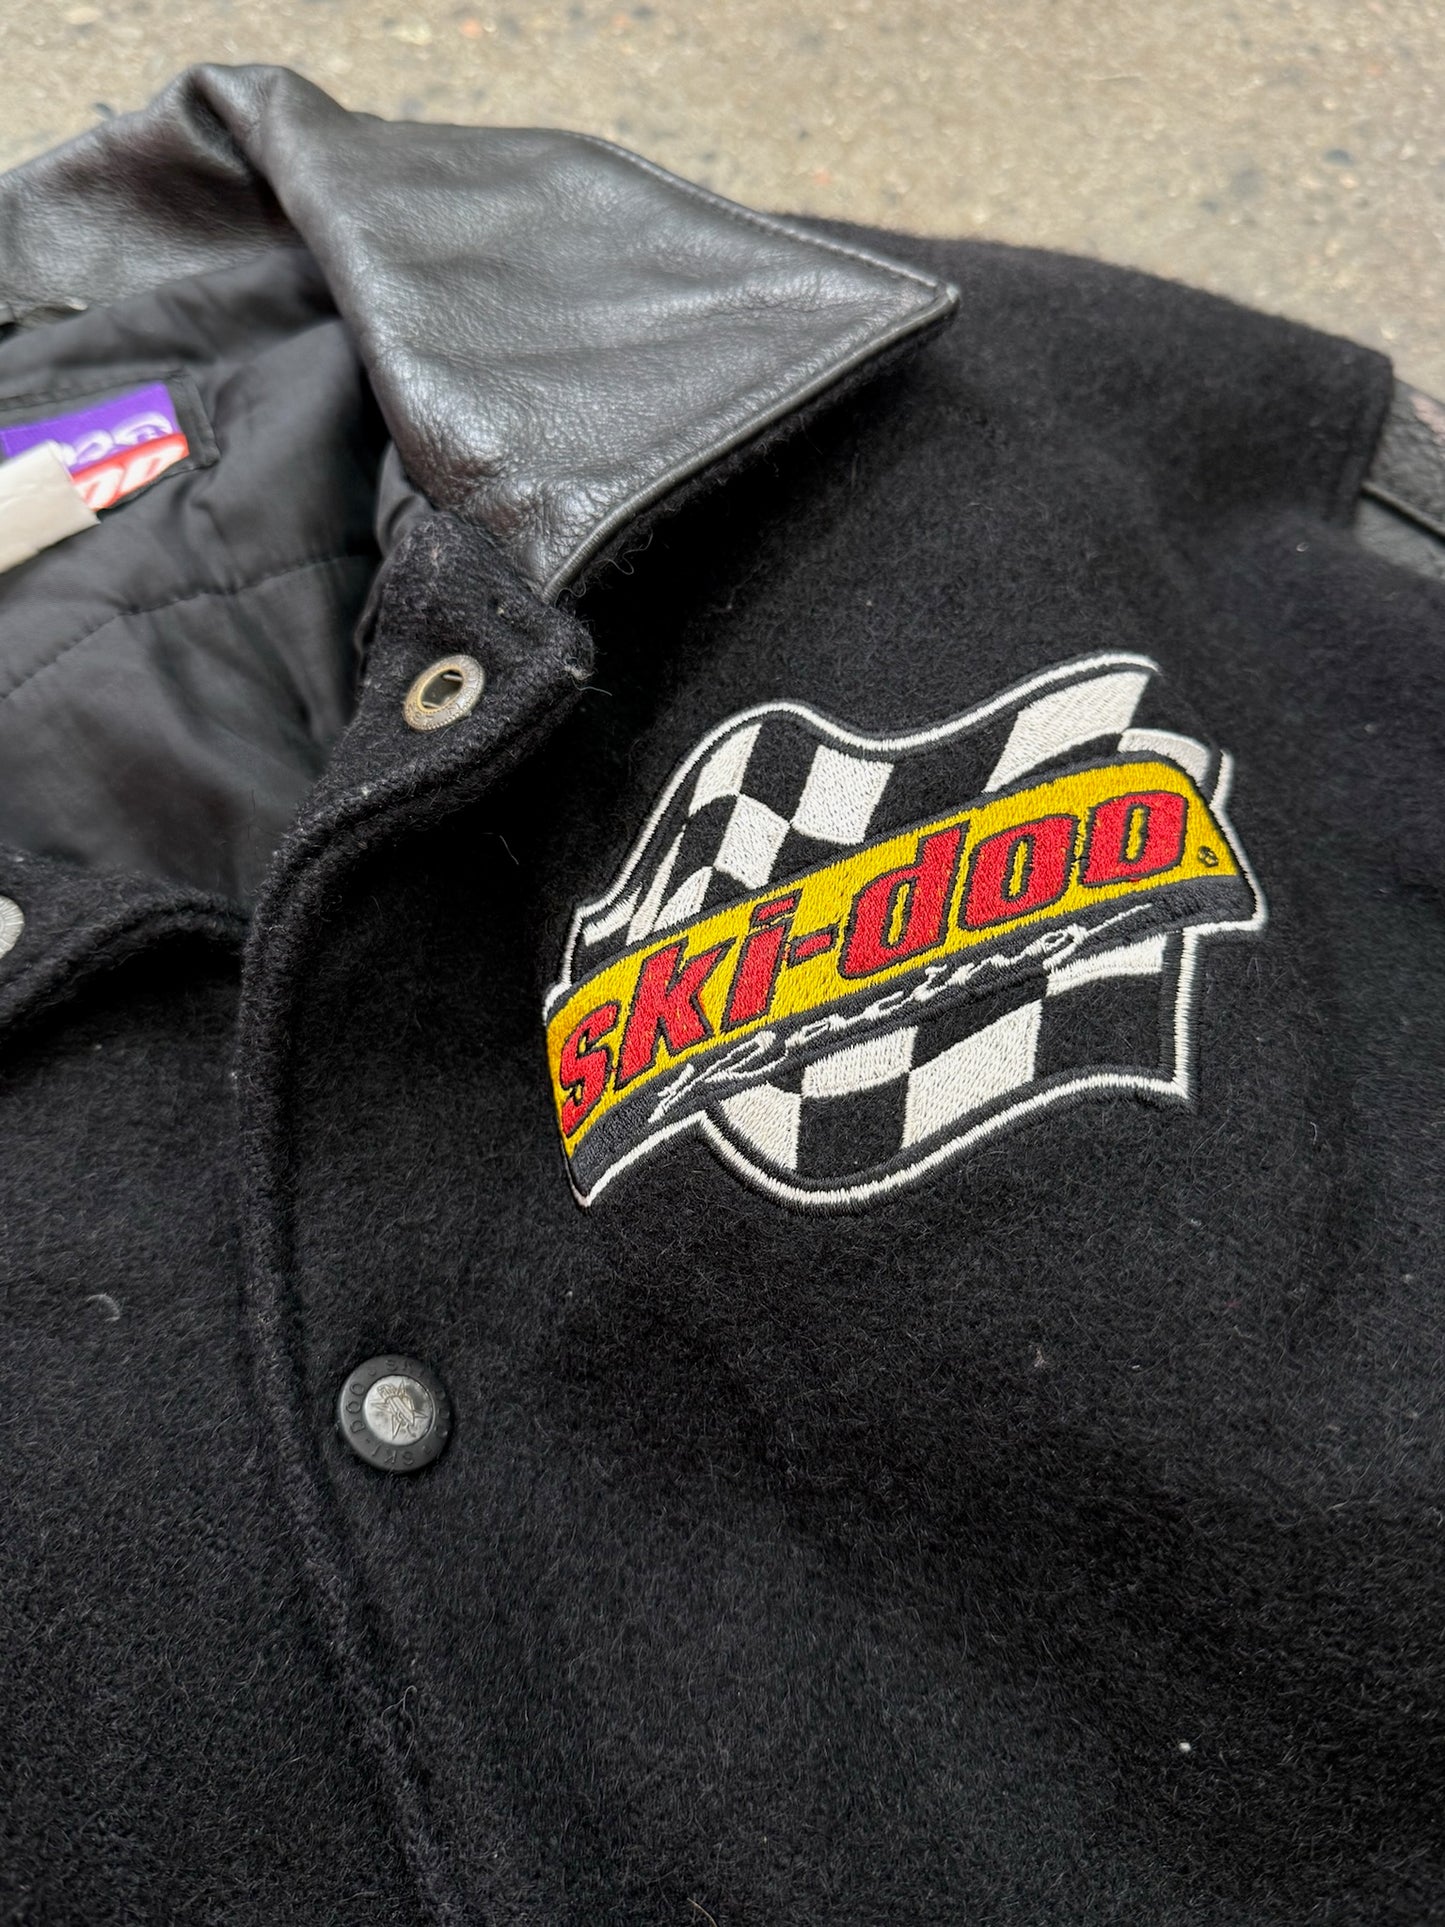 Vintage Ski-Doo Leather Heavy Jacket Size XL